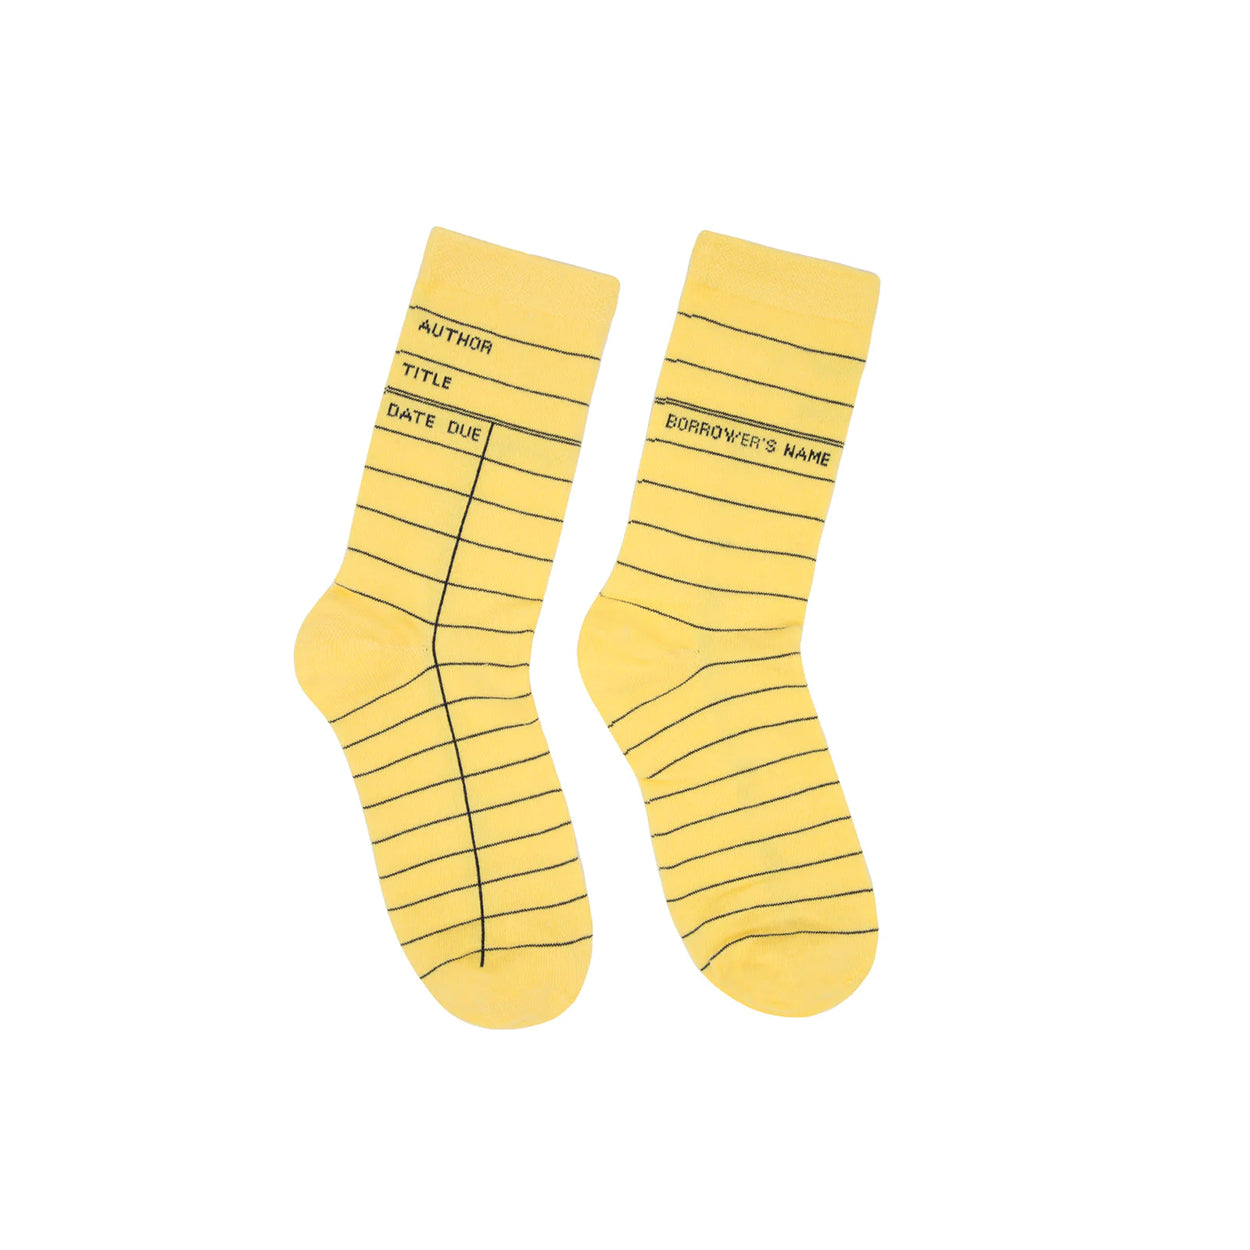 Yellow Library Card Socks